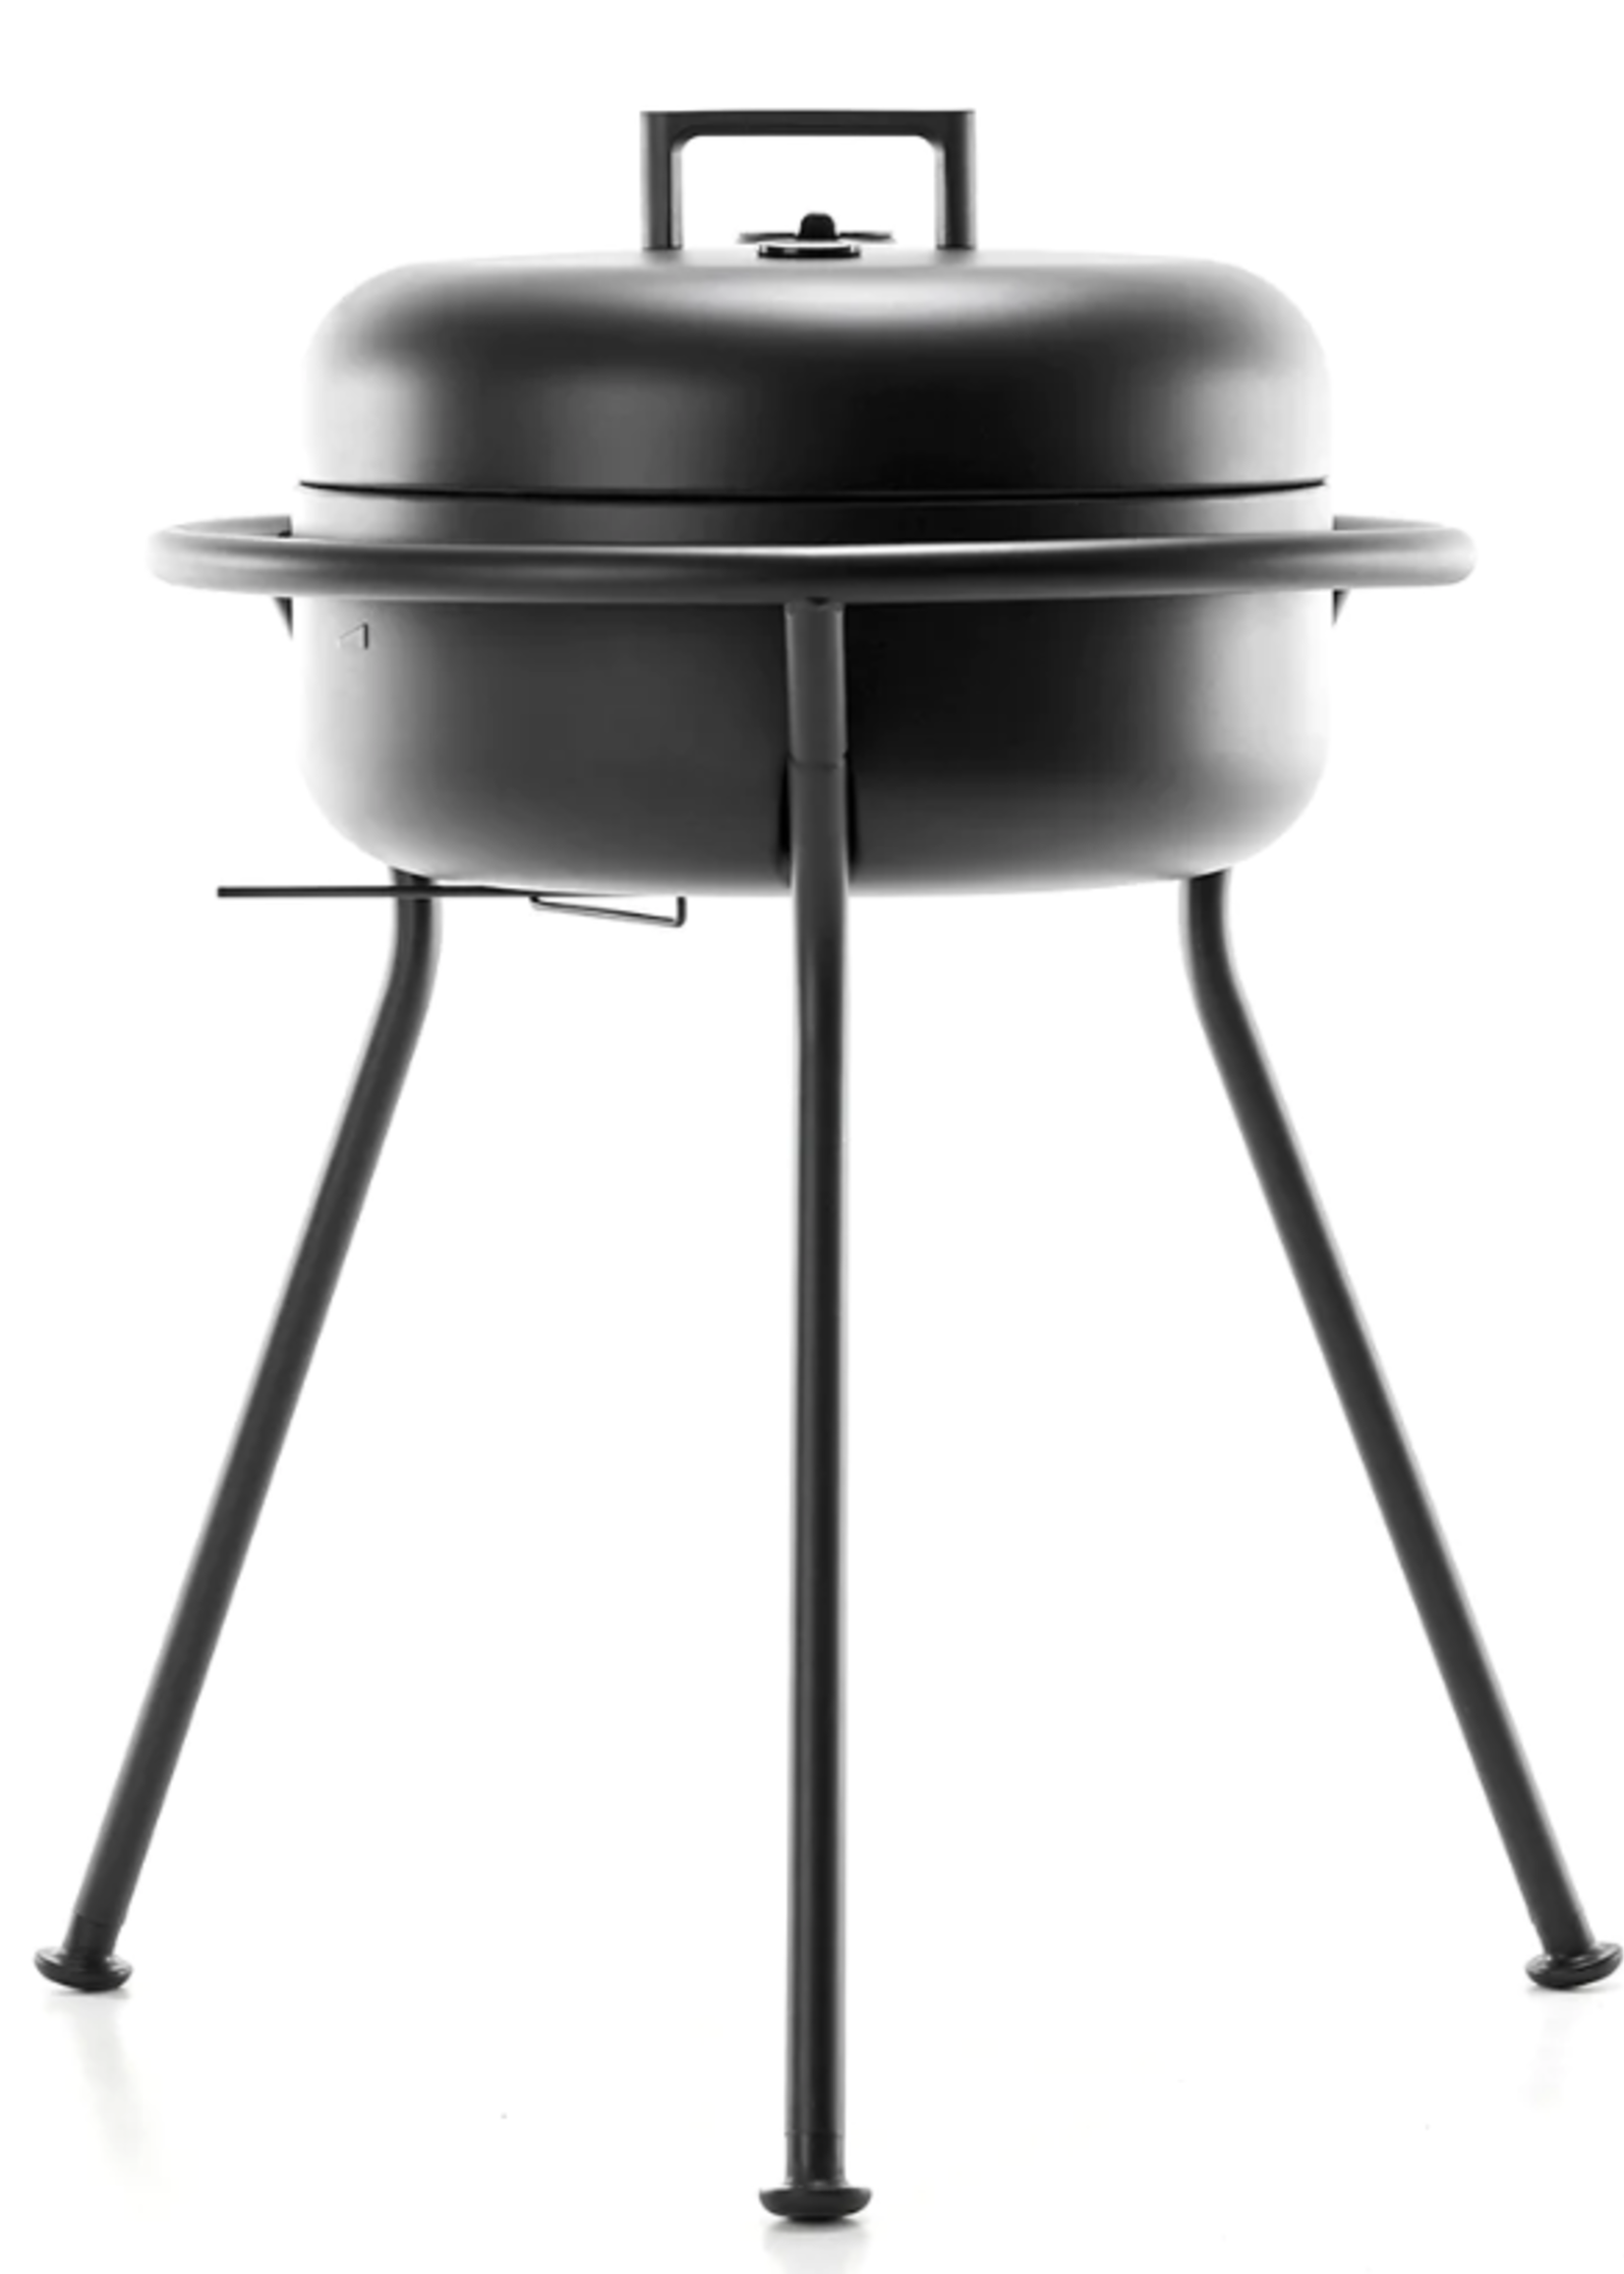 Zee ZEE - KORO - Barbecue - Acier peint par poudrage - Noir